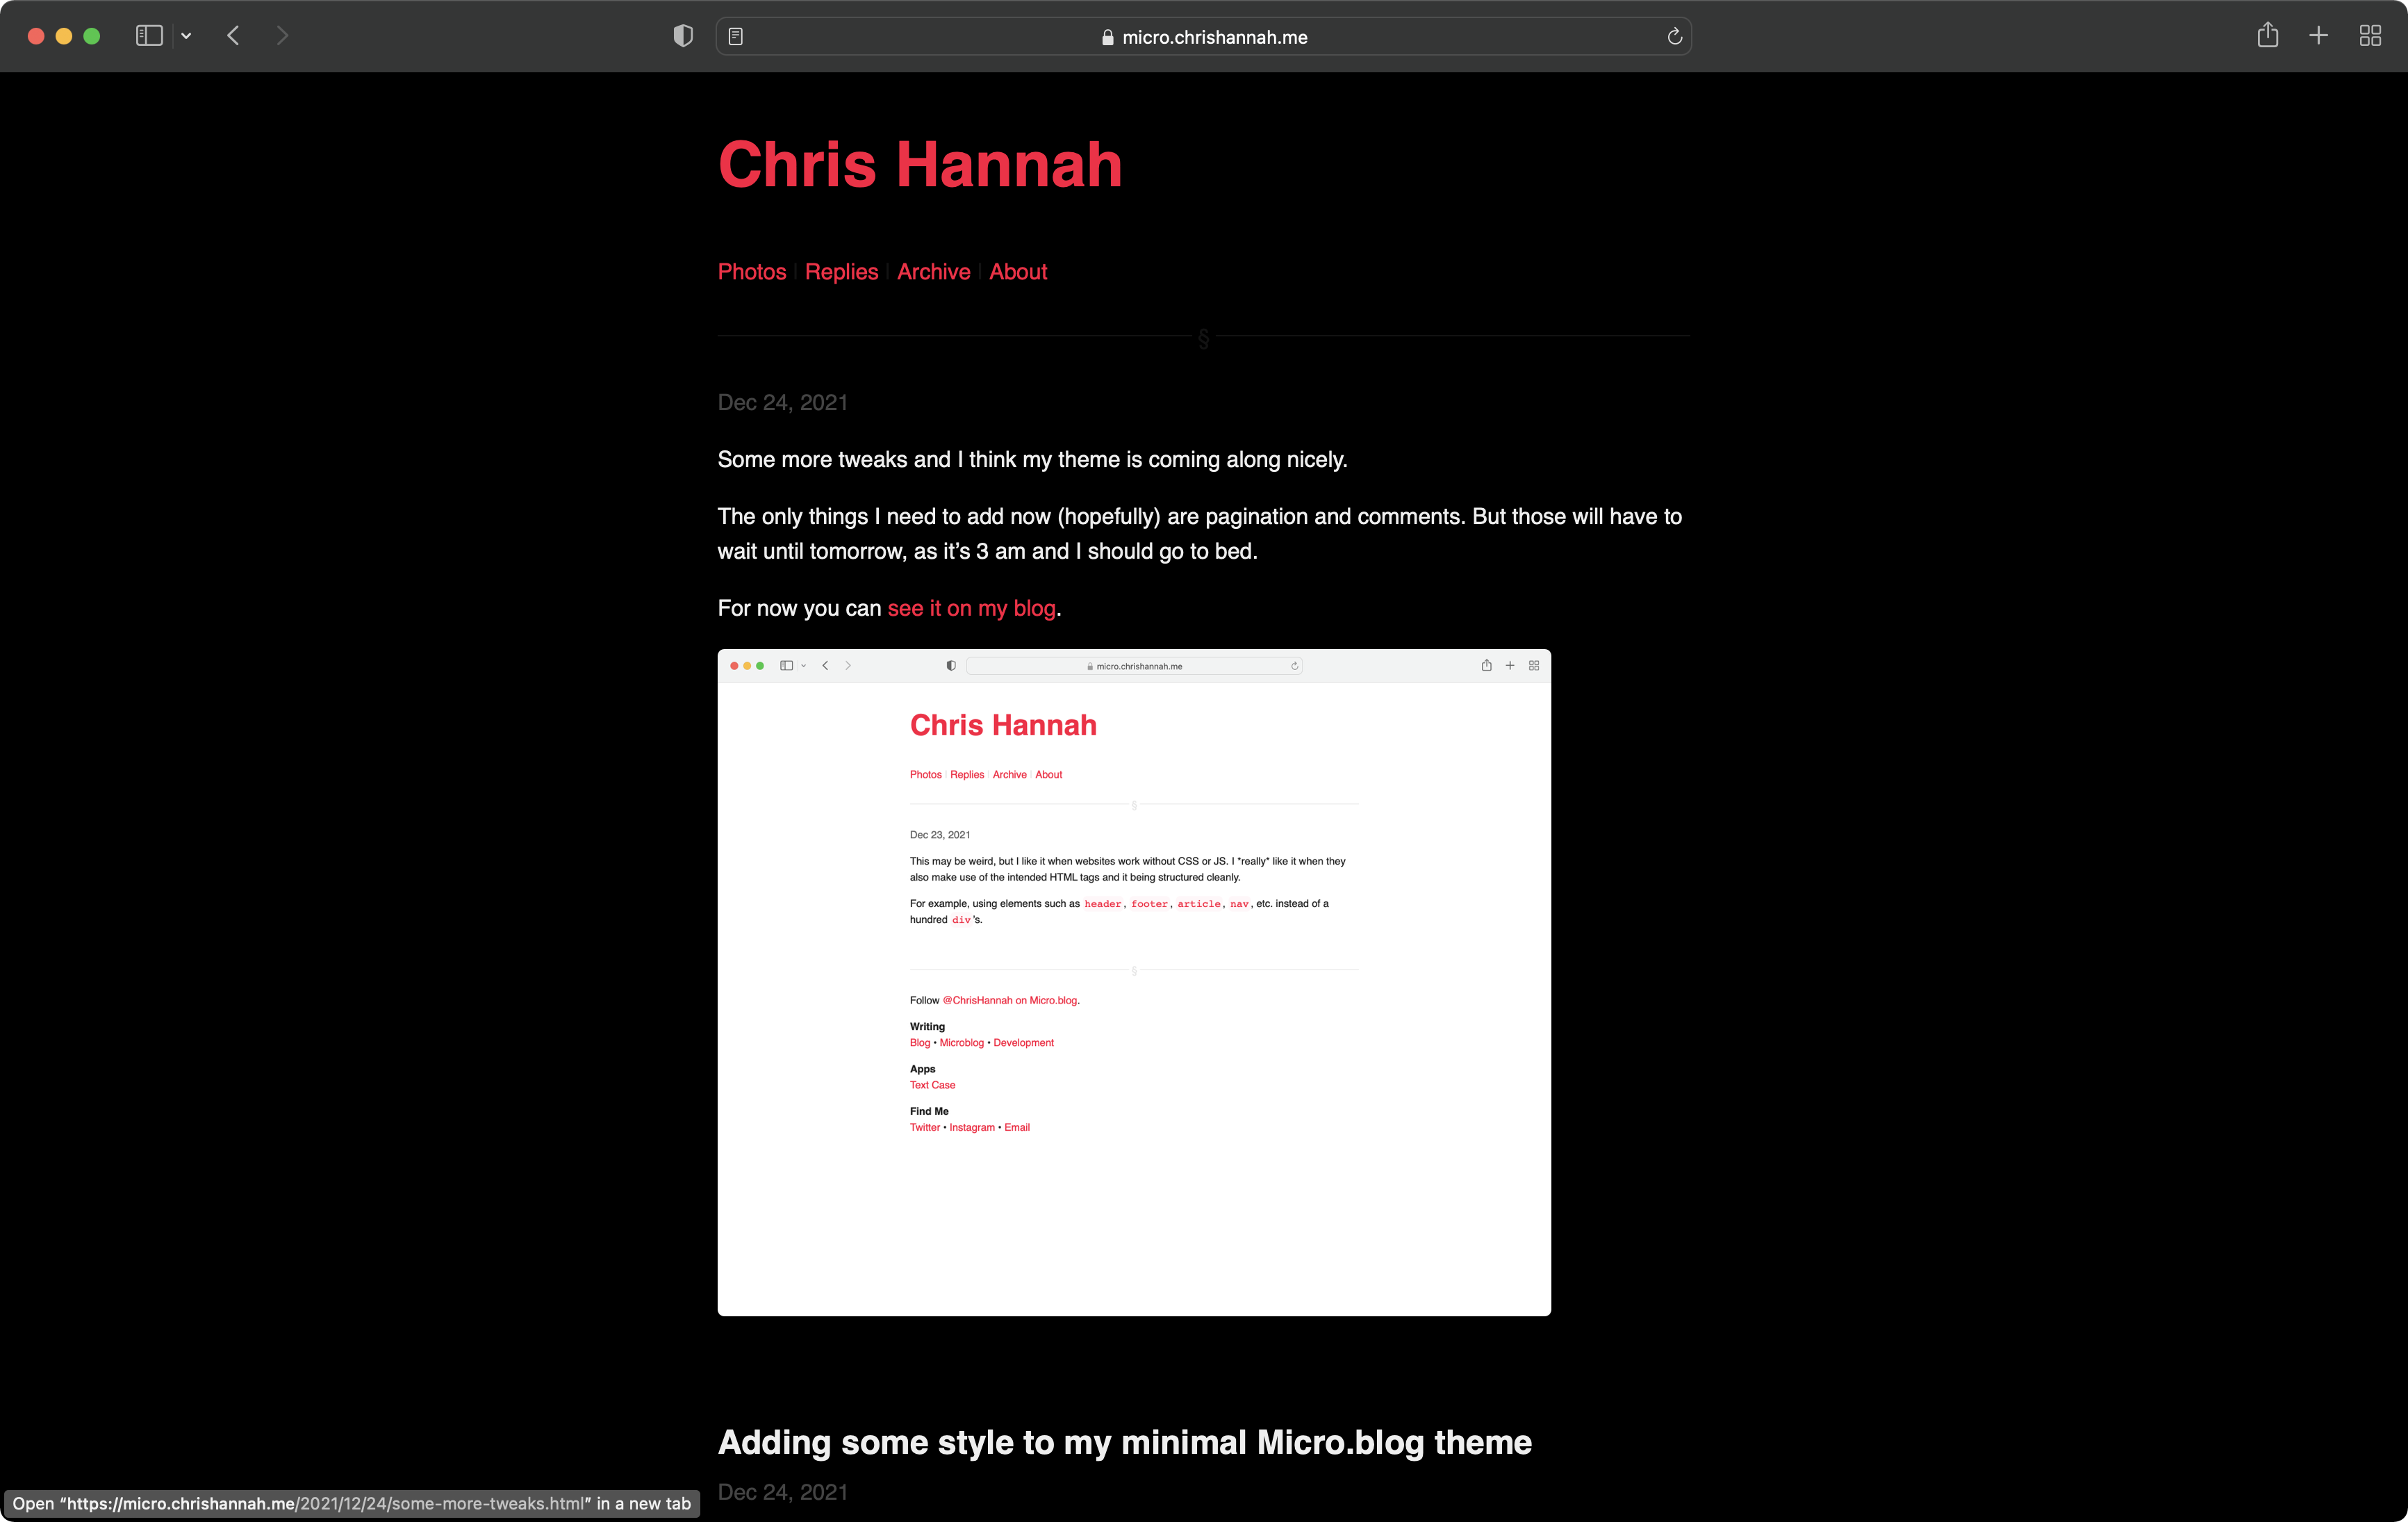 Chris Hannah's site in dark mode.